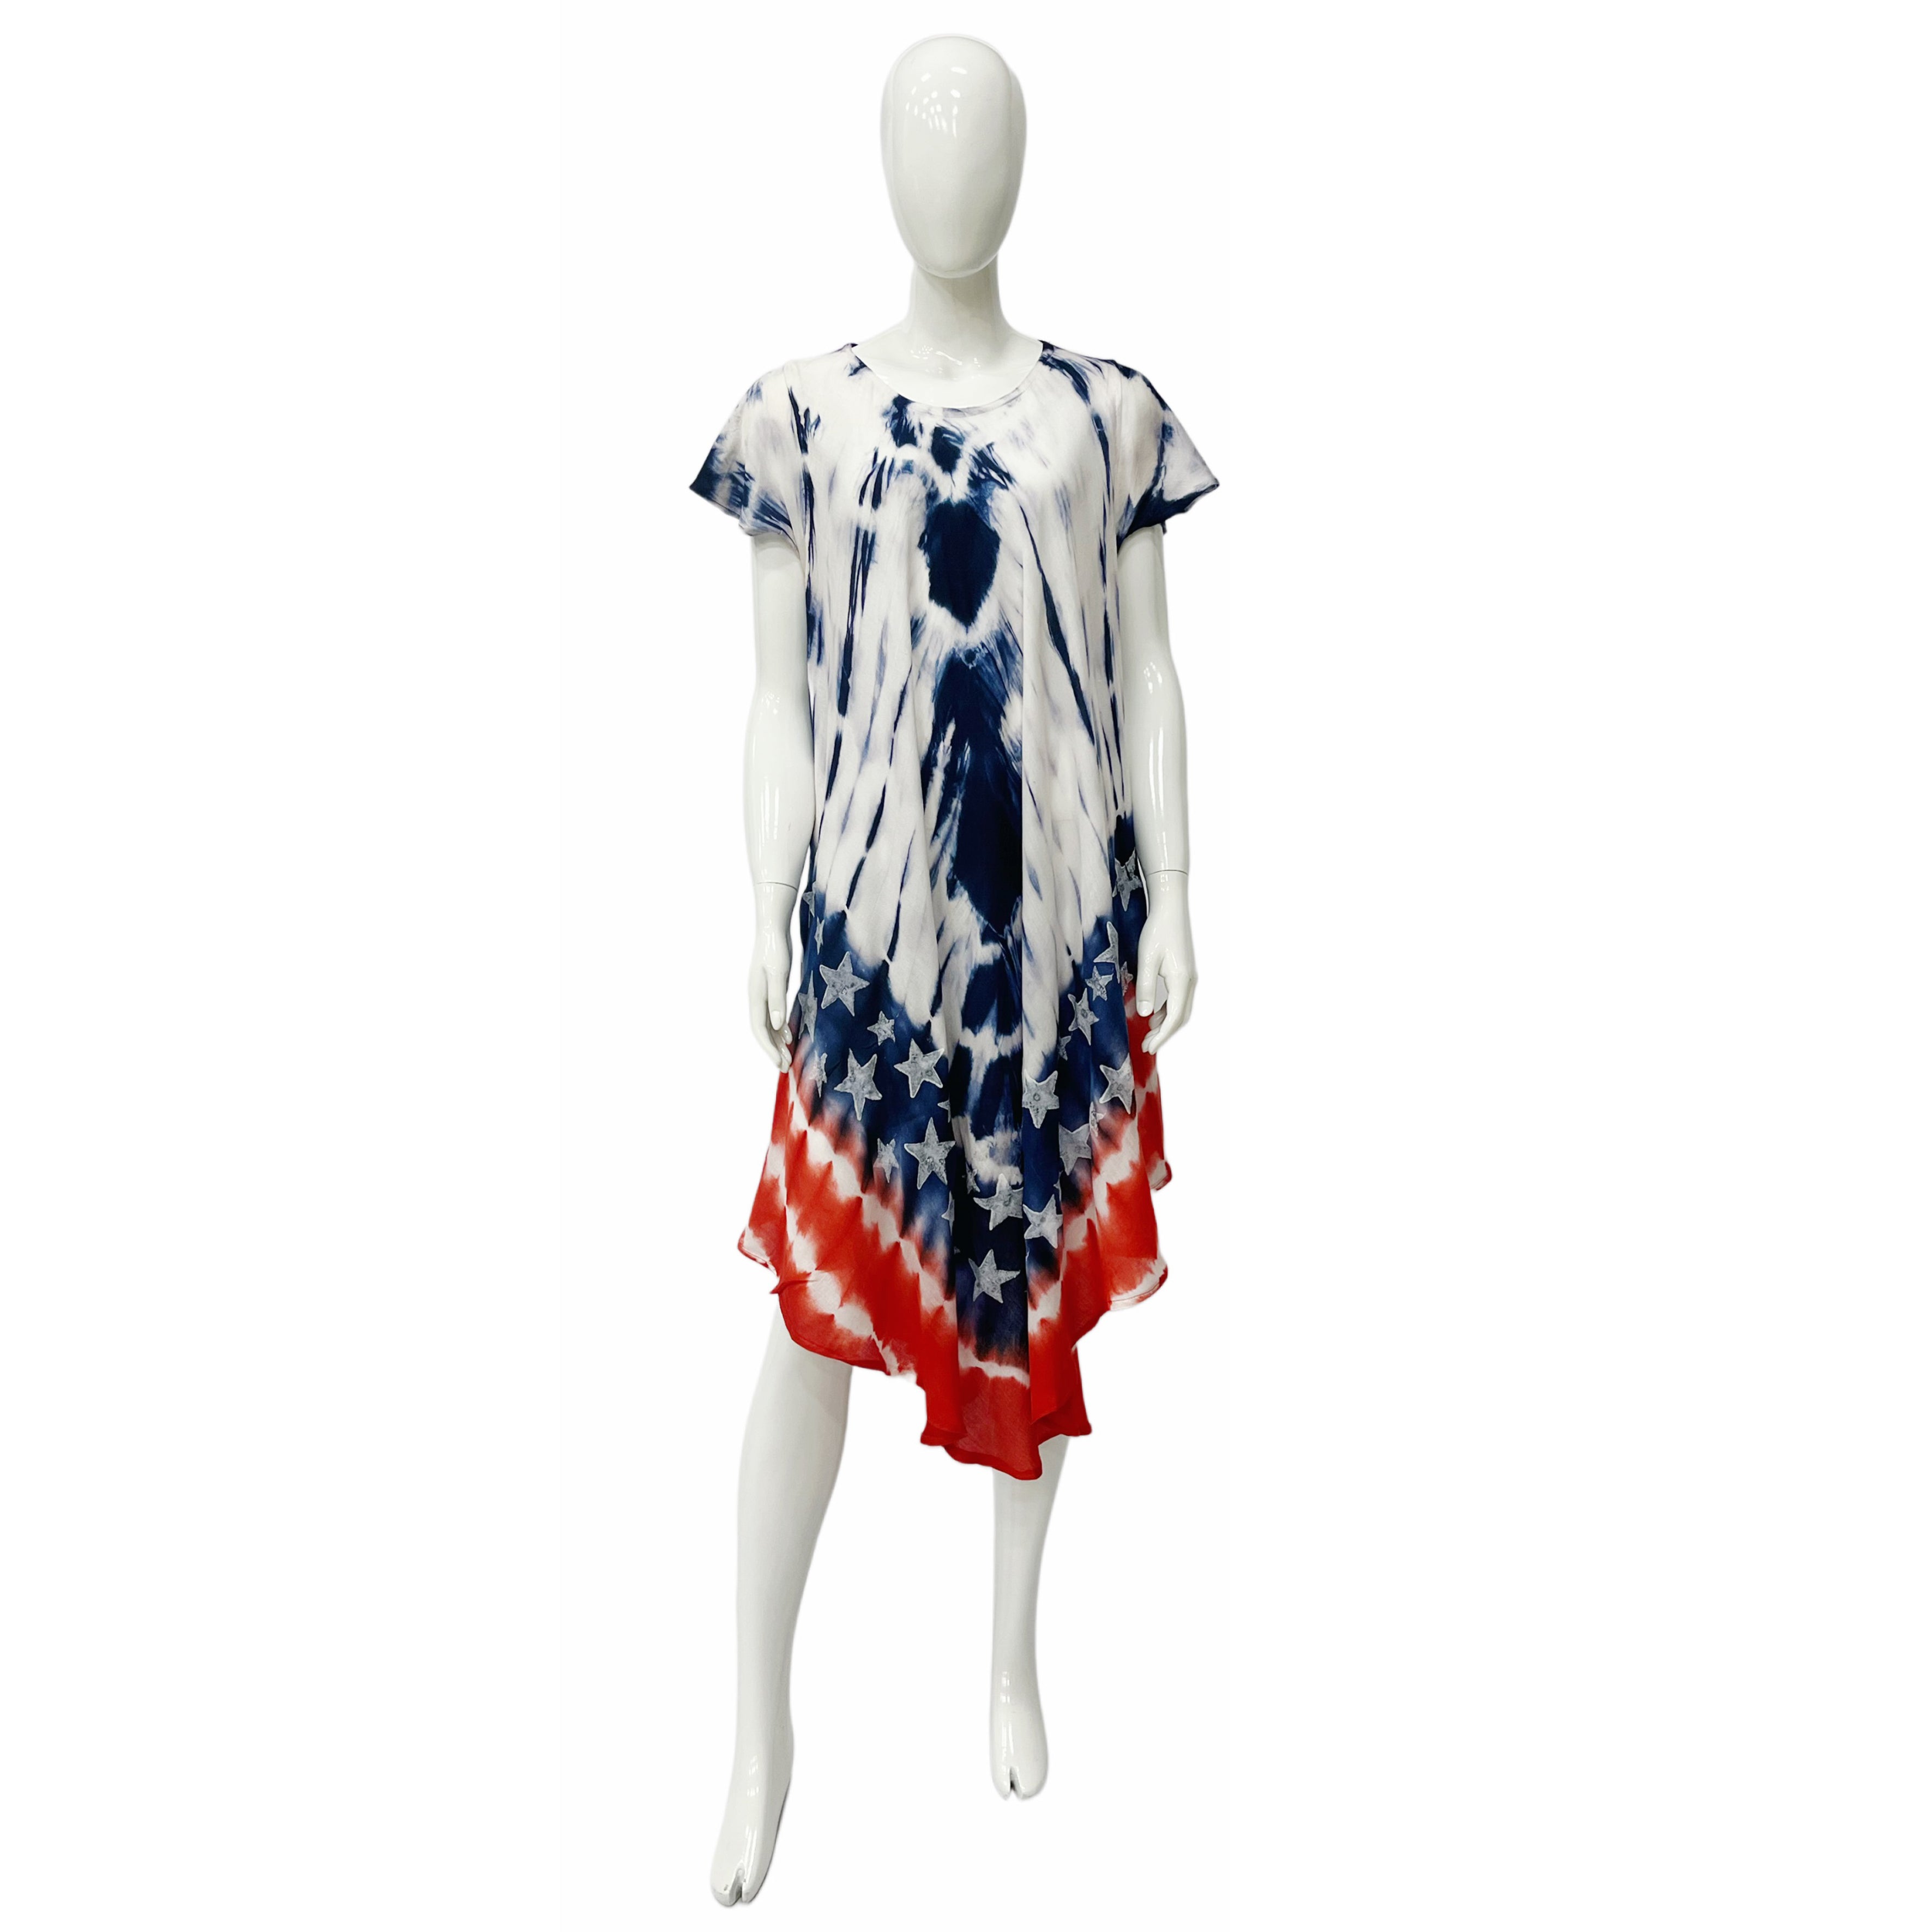 Wholesale Women's DRESSes Rayon Staple American Flag Tie Dye with Block Paint Ss Umbrella DRESS 120G